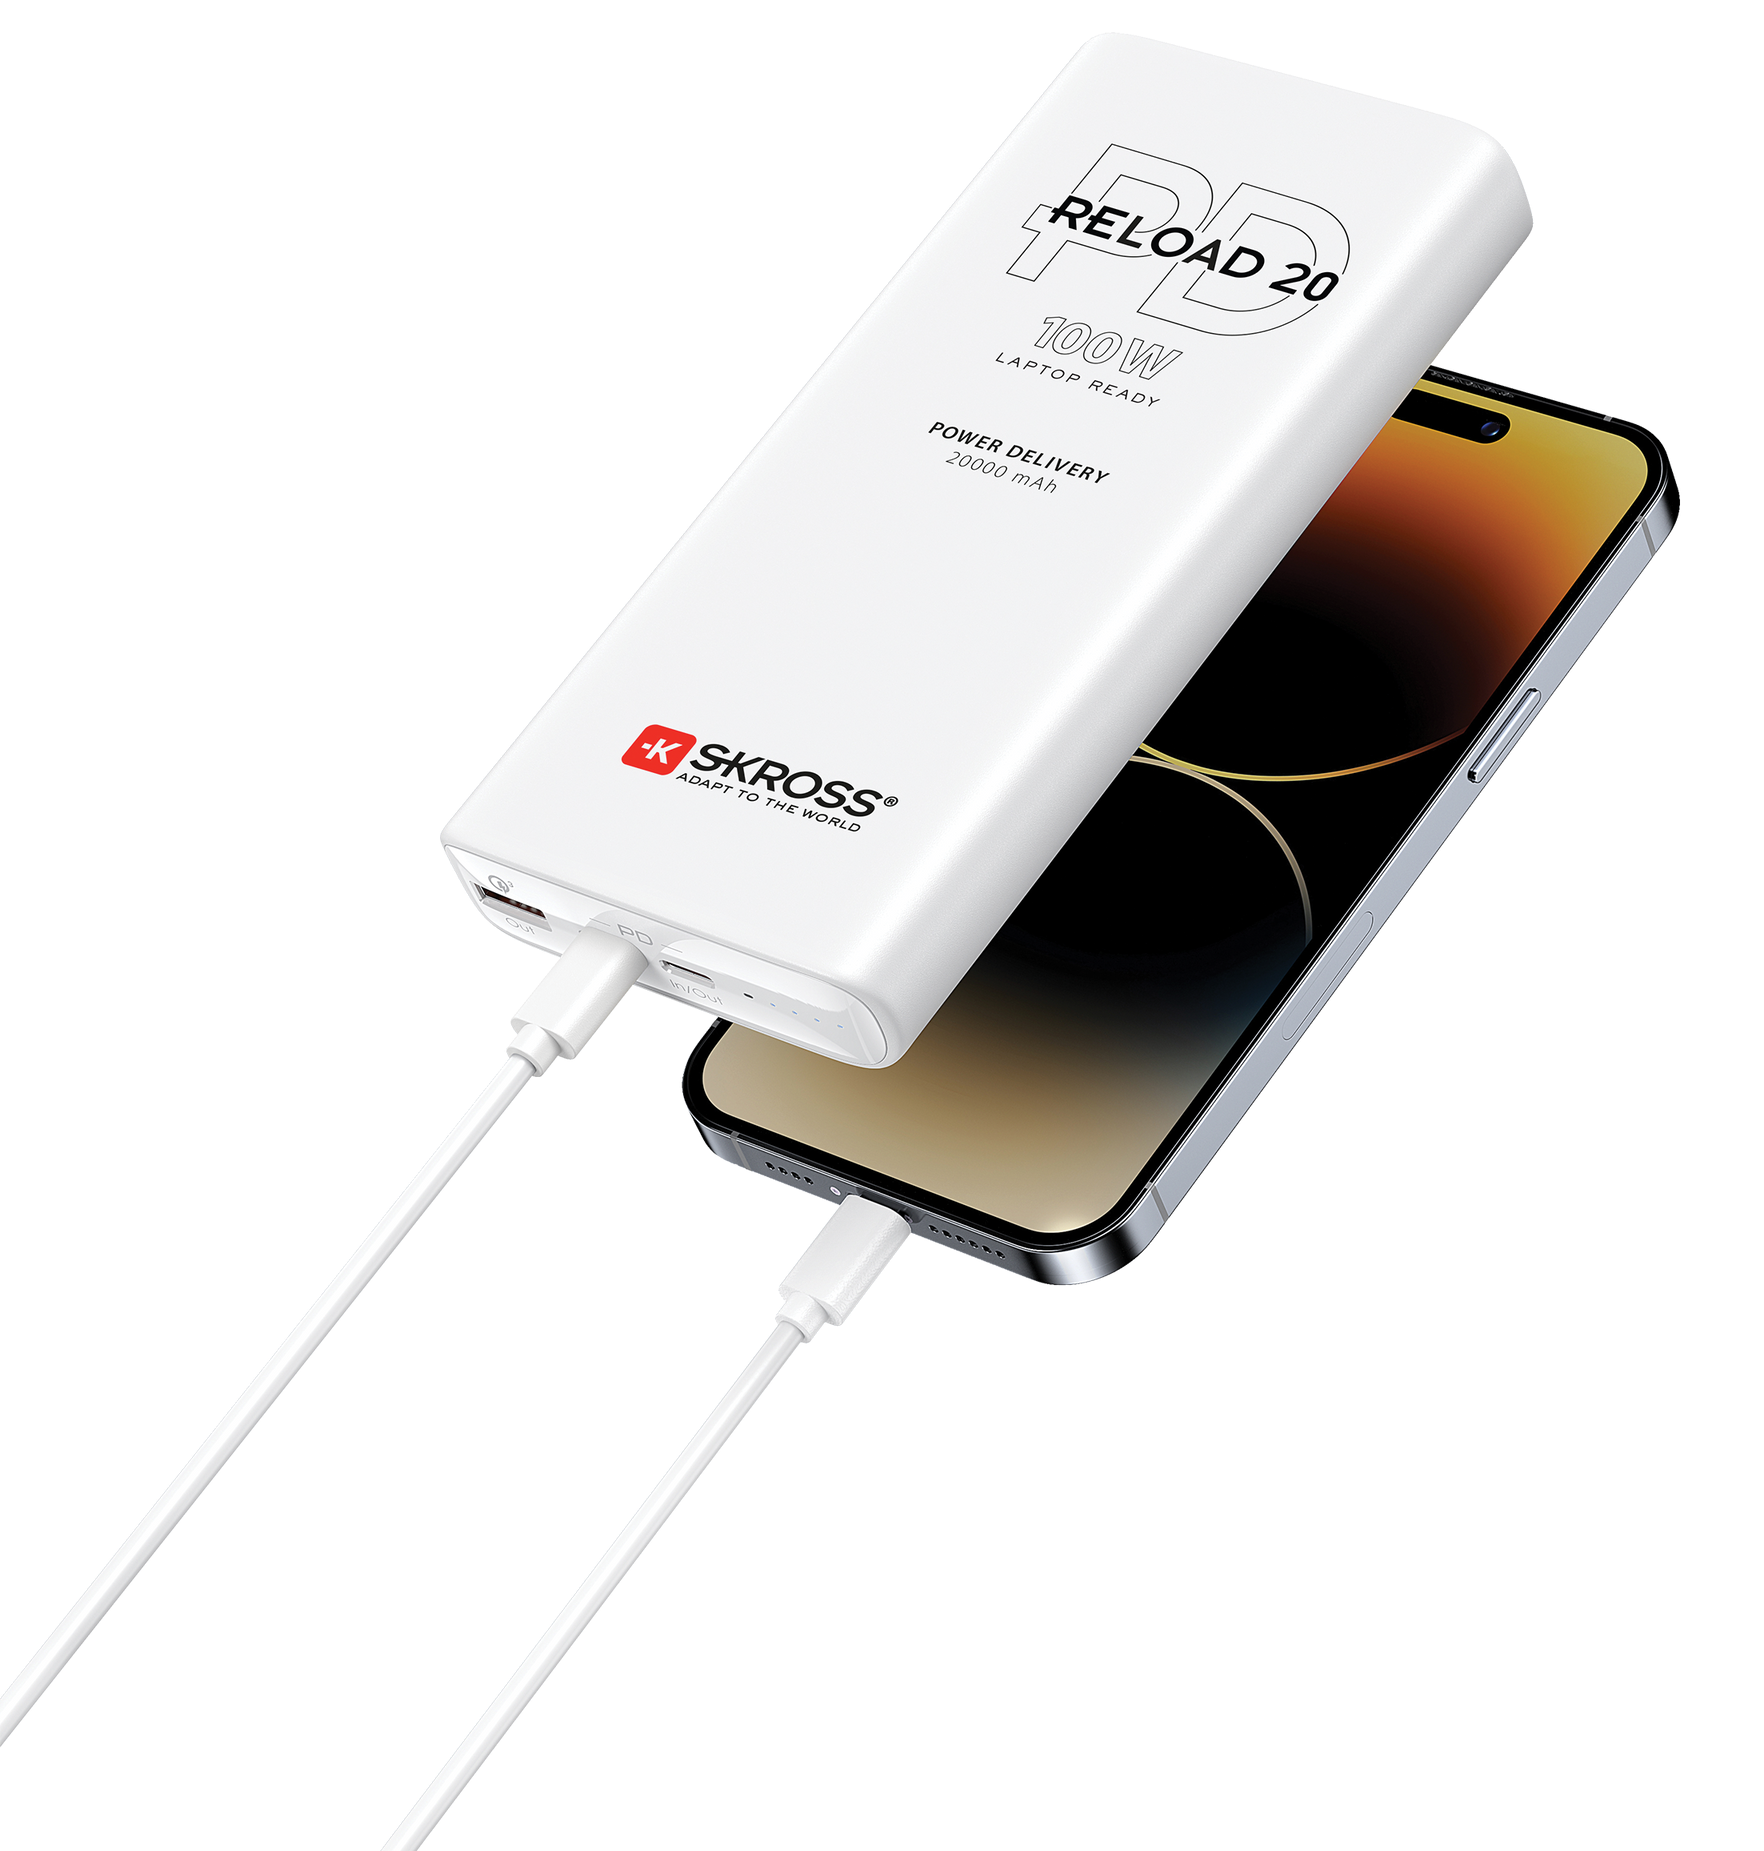 20000 mAh 100w power bank charging iPhone 